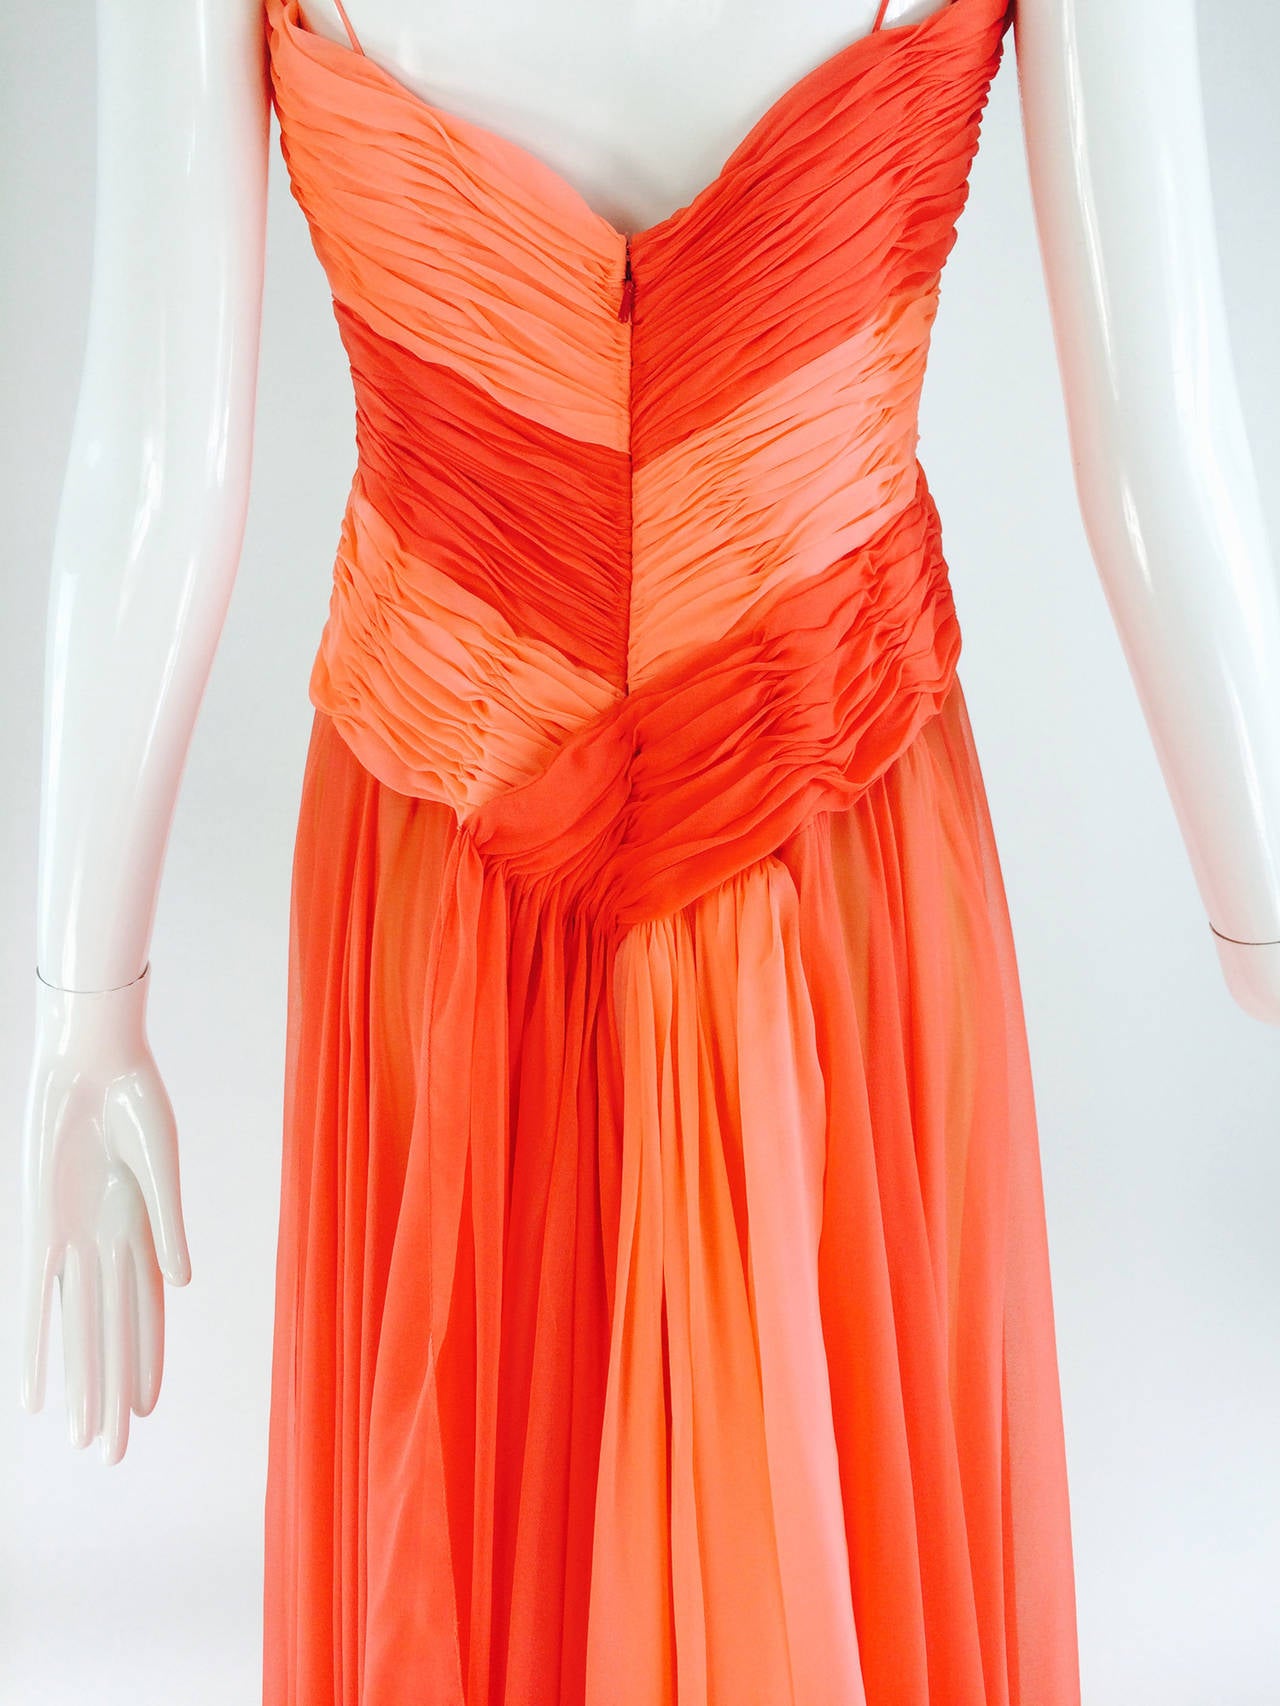 Loris Azzaro goddess gown in coral/peach silk chiffon 1970s 2